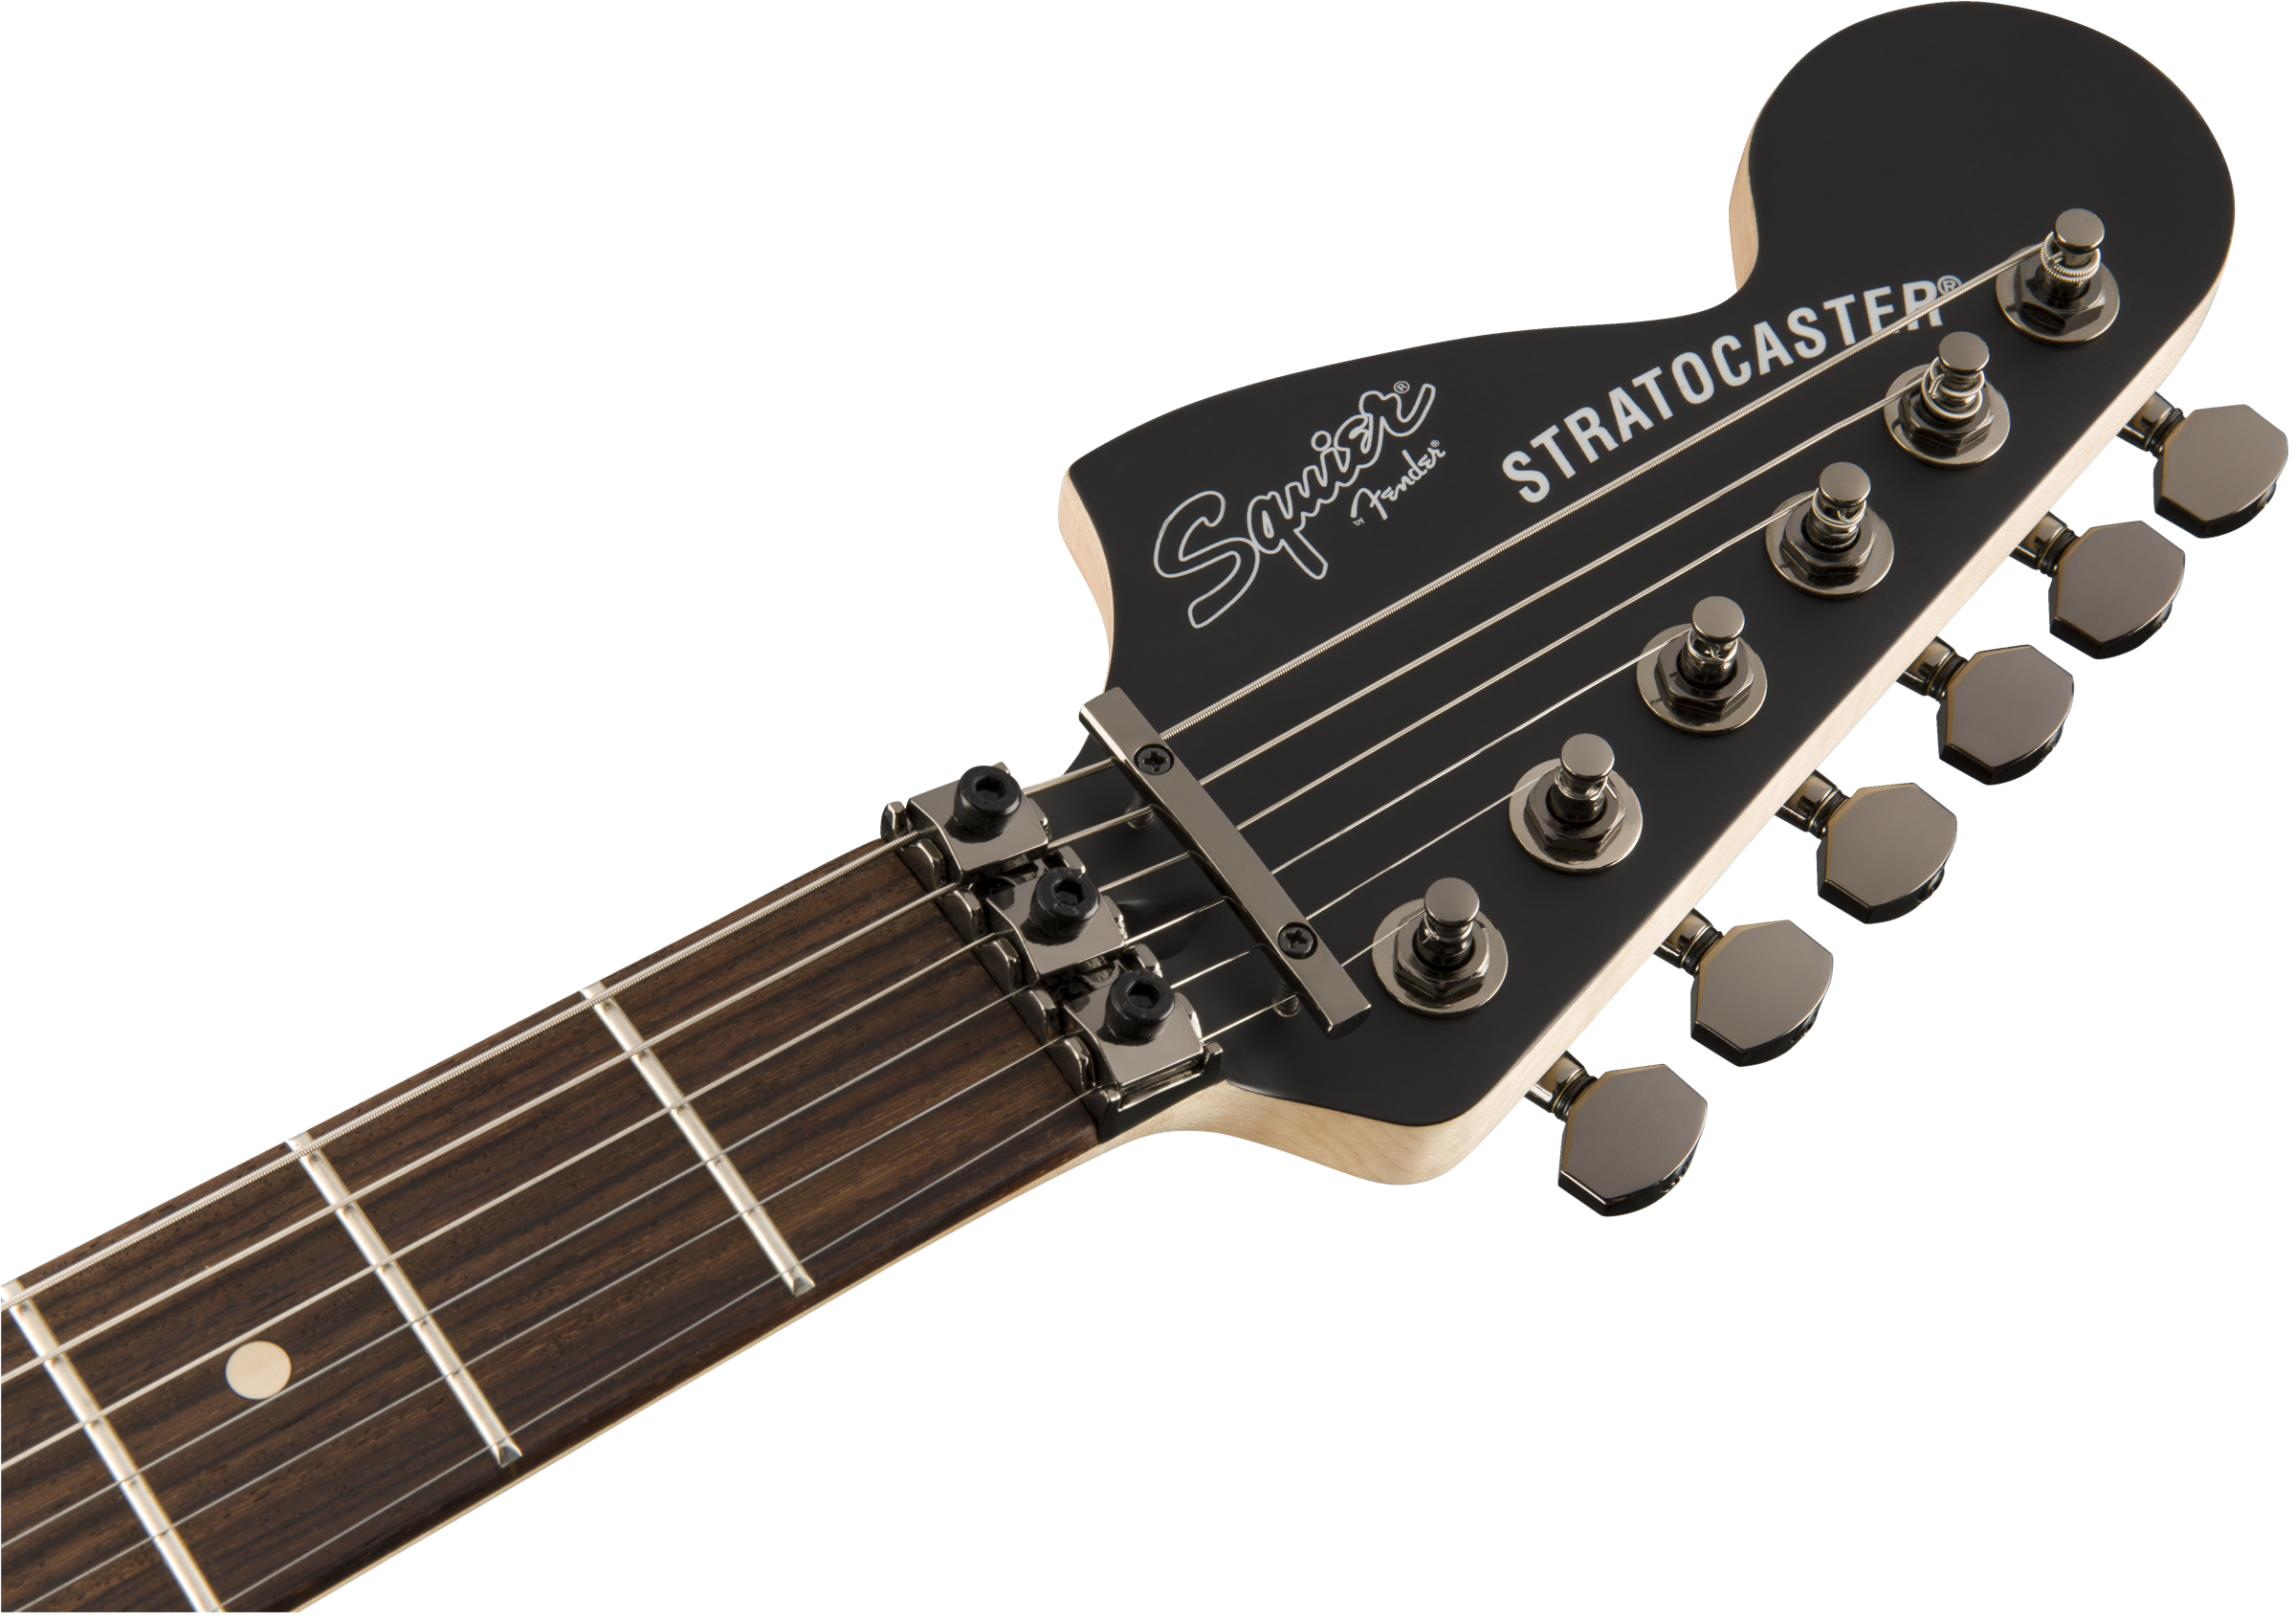 SQUIER Contemporary Active Stratocaster® HH, Flat Black